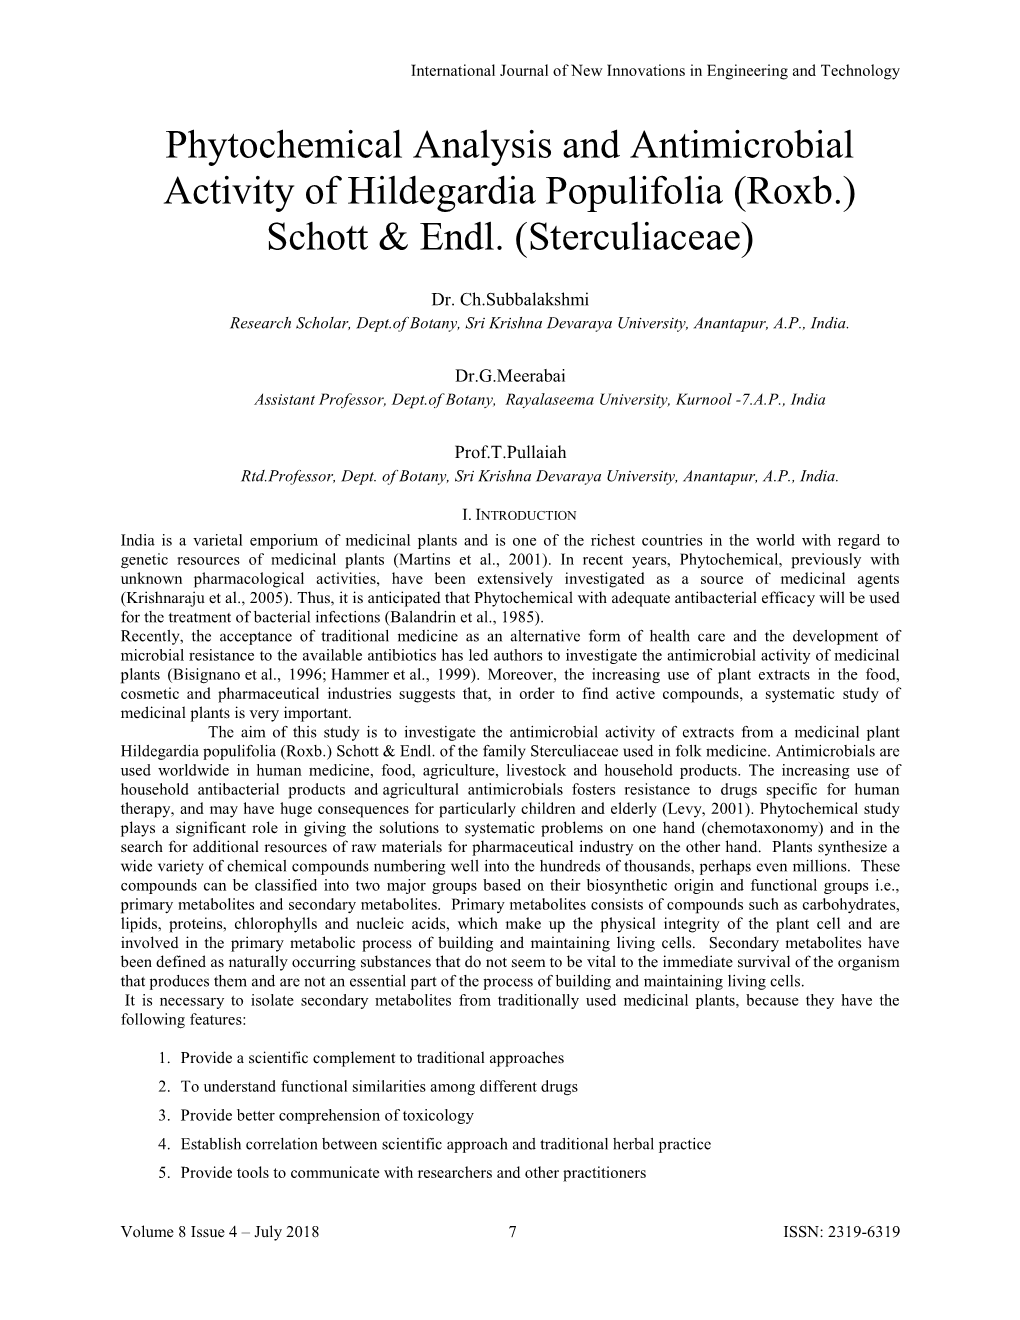 Phytochemical Analysis and Antimicrobial Activity of Hildegardia Populifolia (Roxb.) Schott & Endl